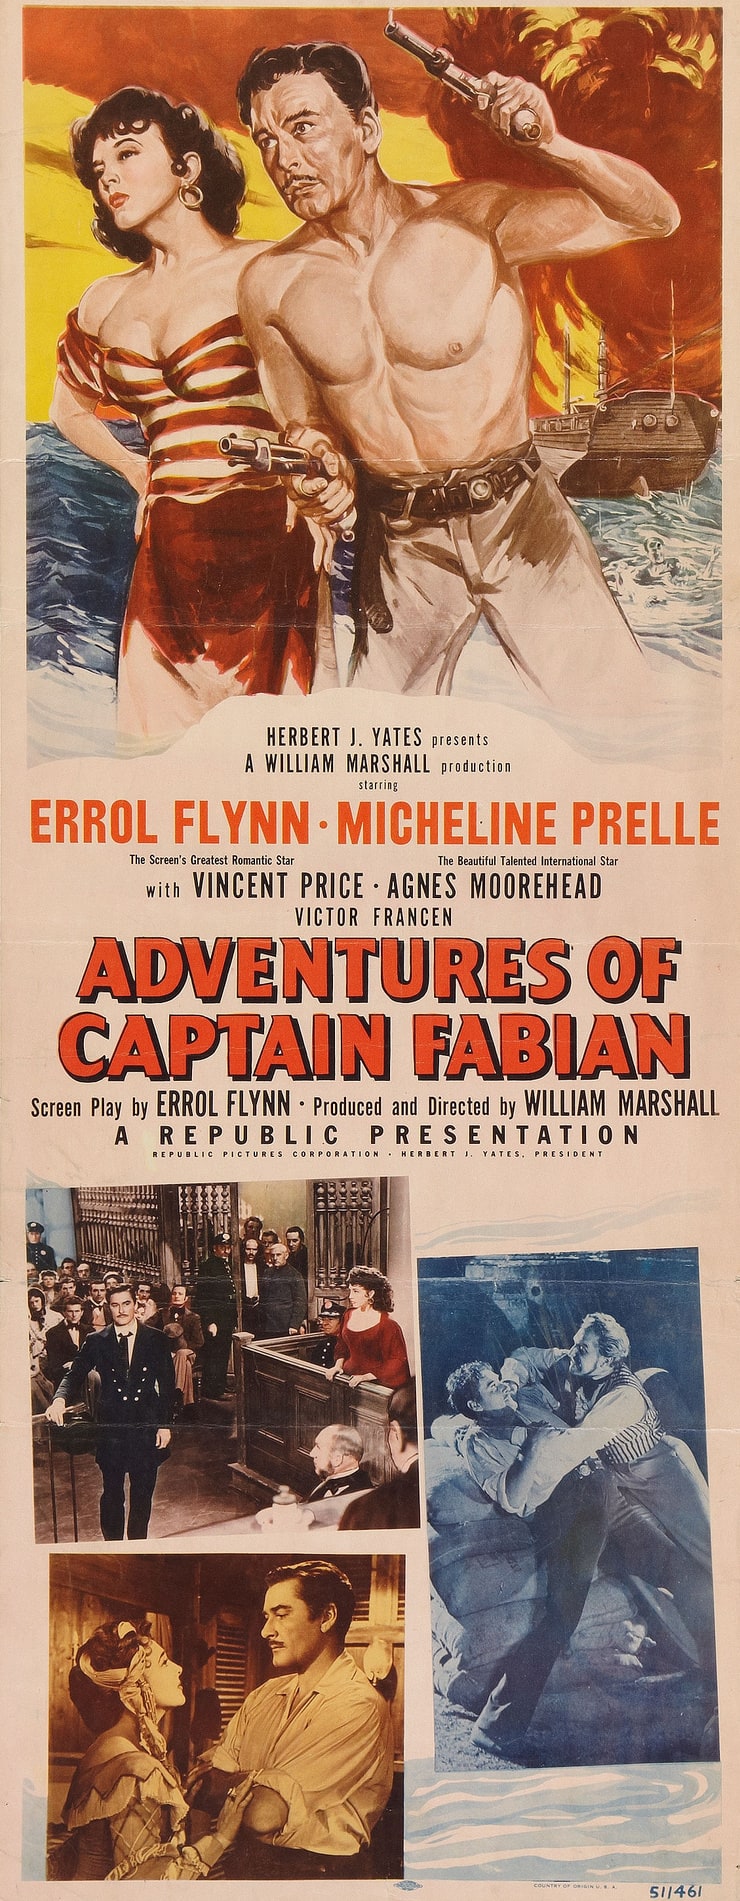 Adventures of Captain Fabian